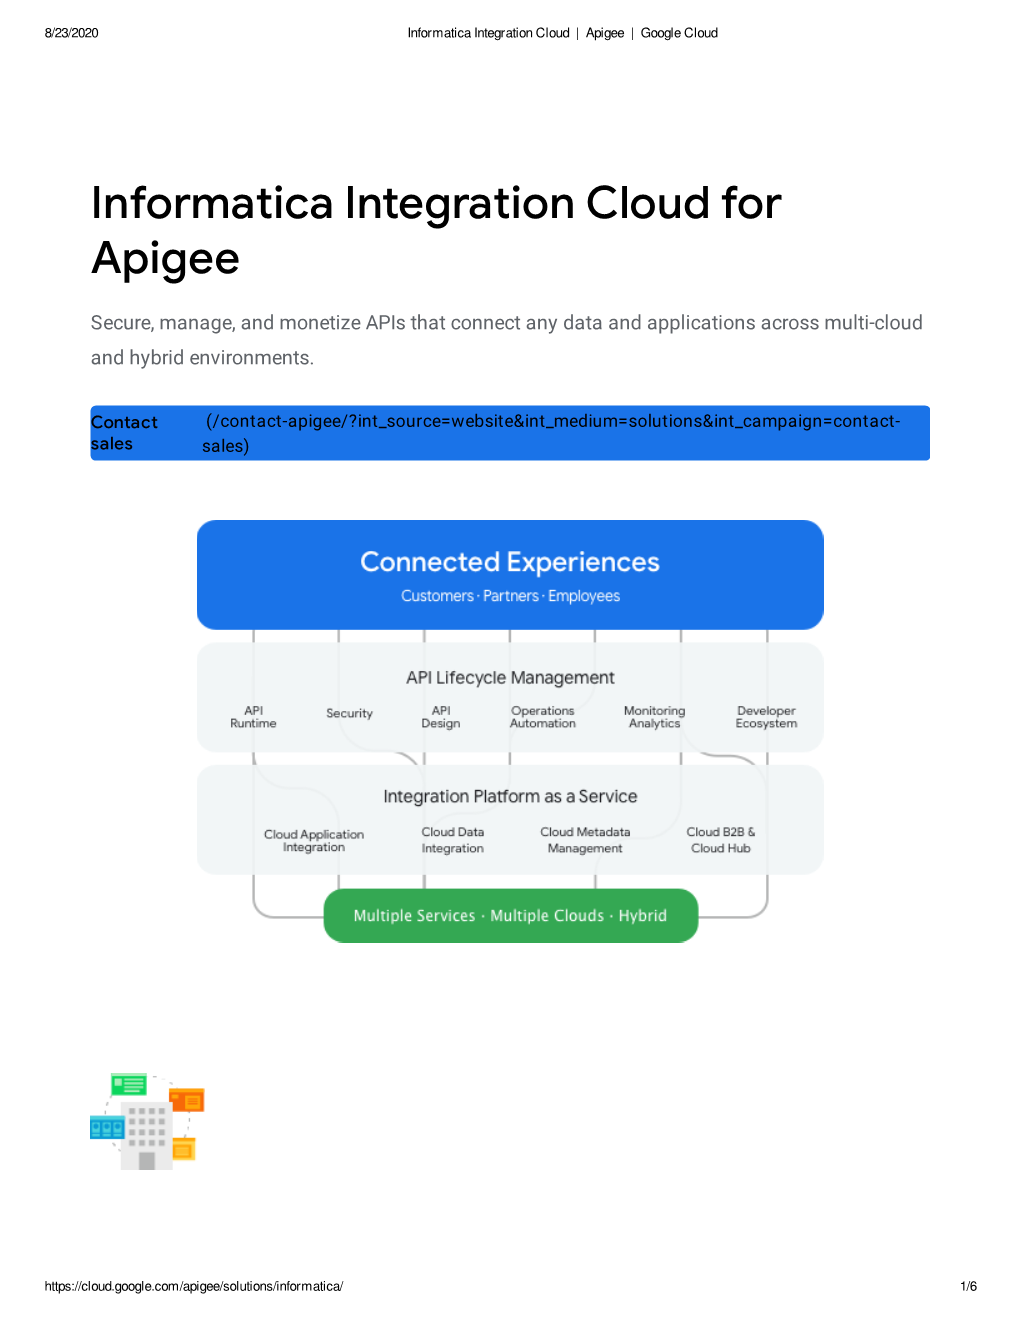 Informatica Integration Cloud for Apigee